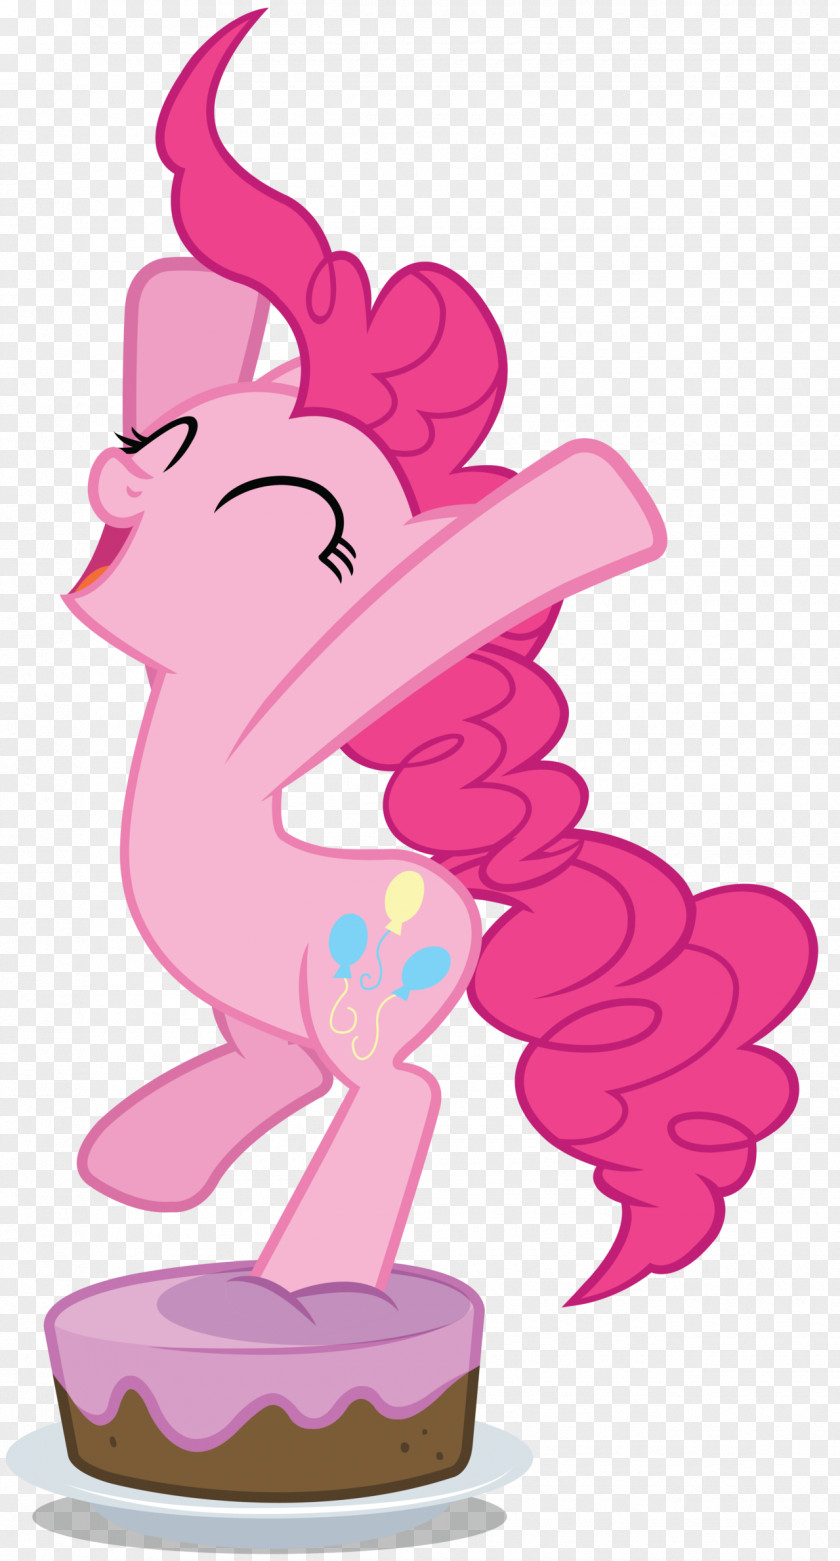 Joyous Pinkie Pie Rainbow Dash My Little Pony: Friendship Is Magic Fandom PNG